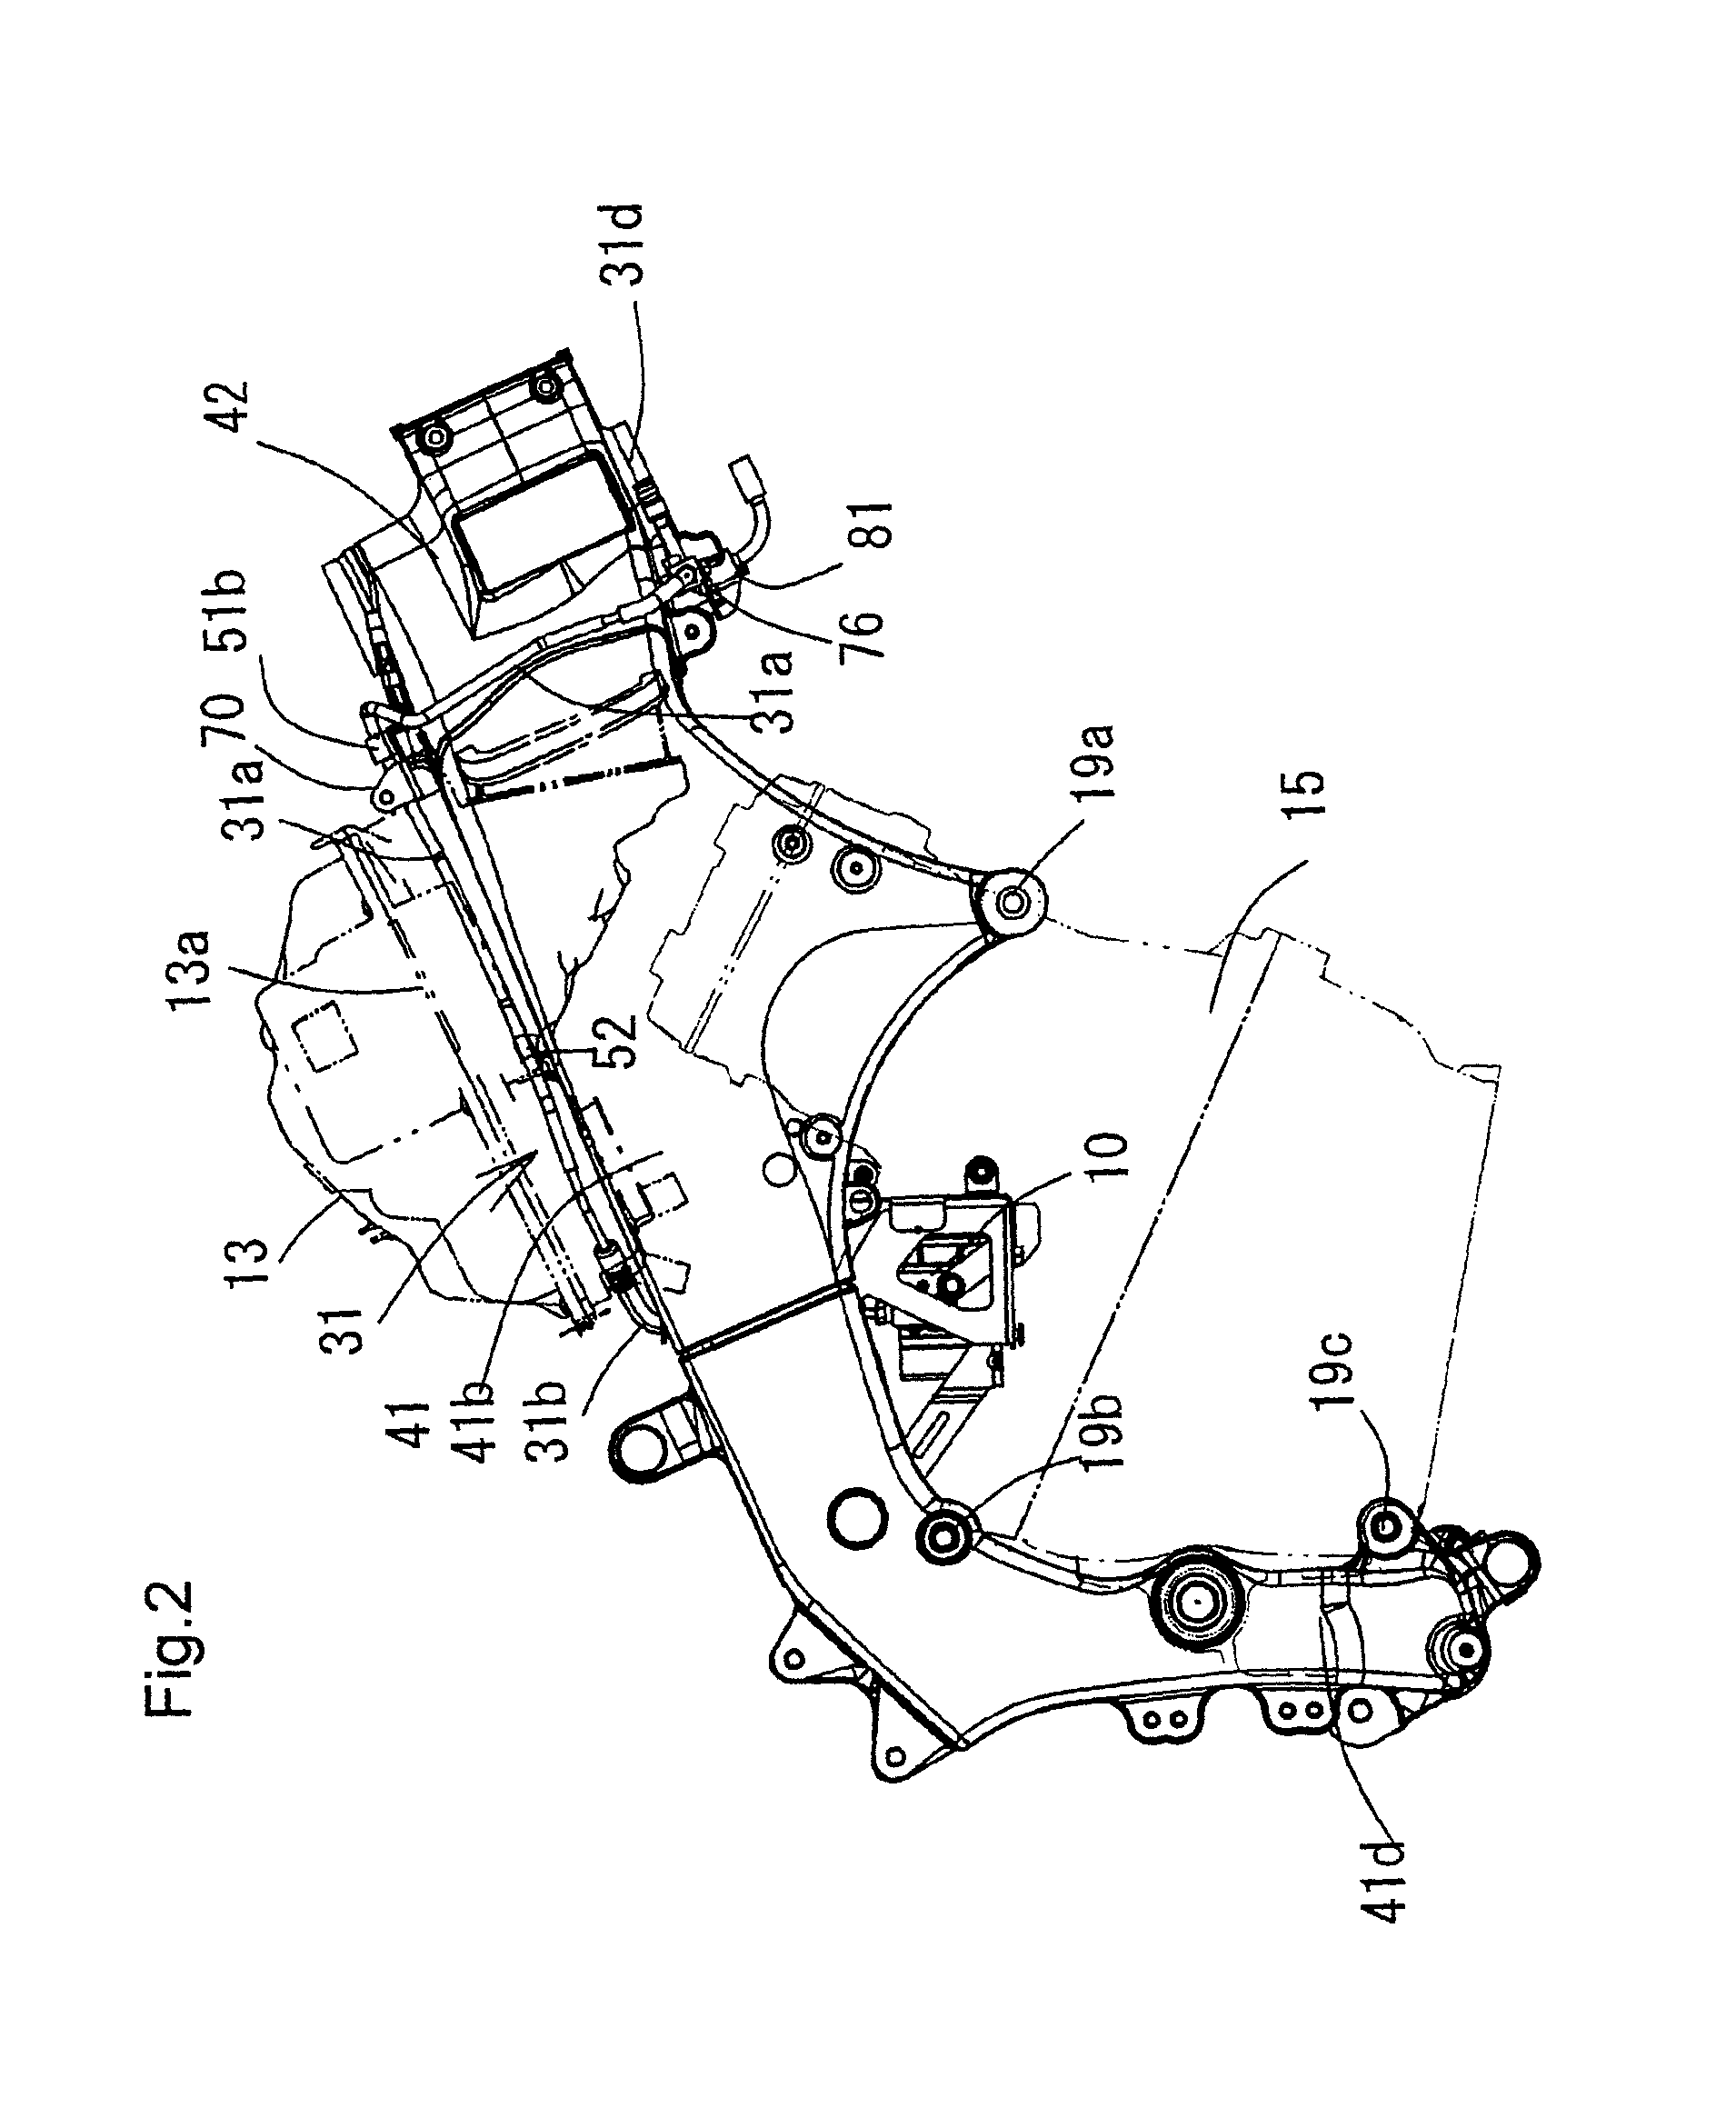 Hydraulic brake apparatus of motorcycle